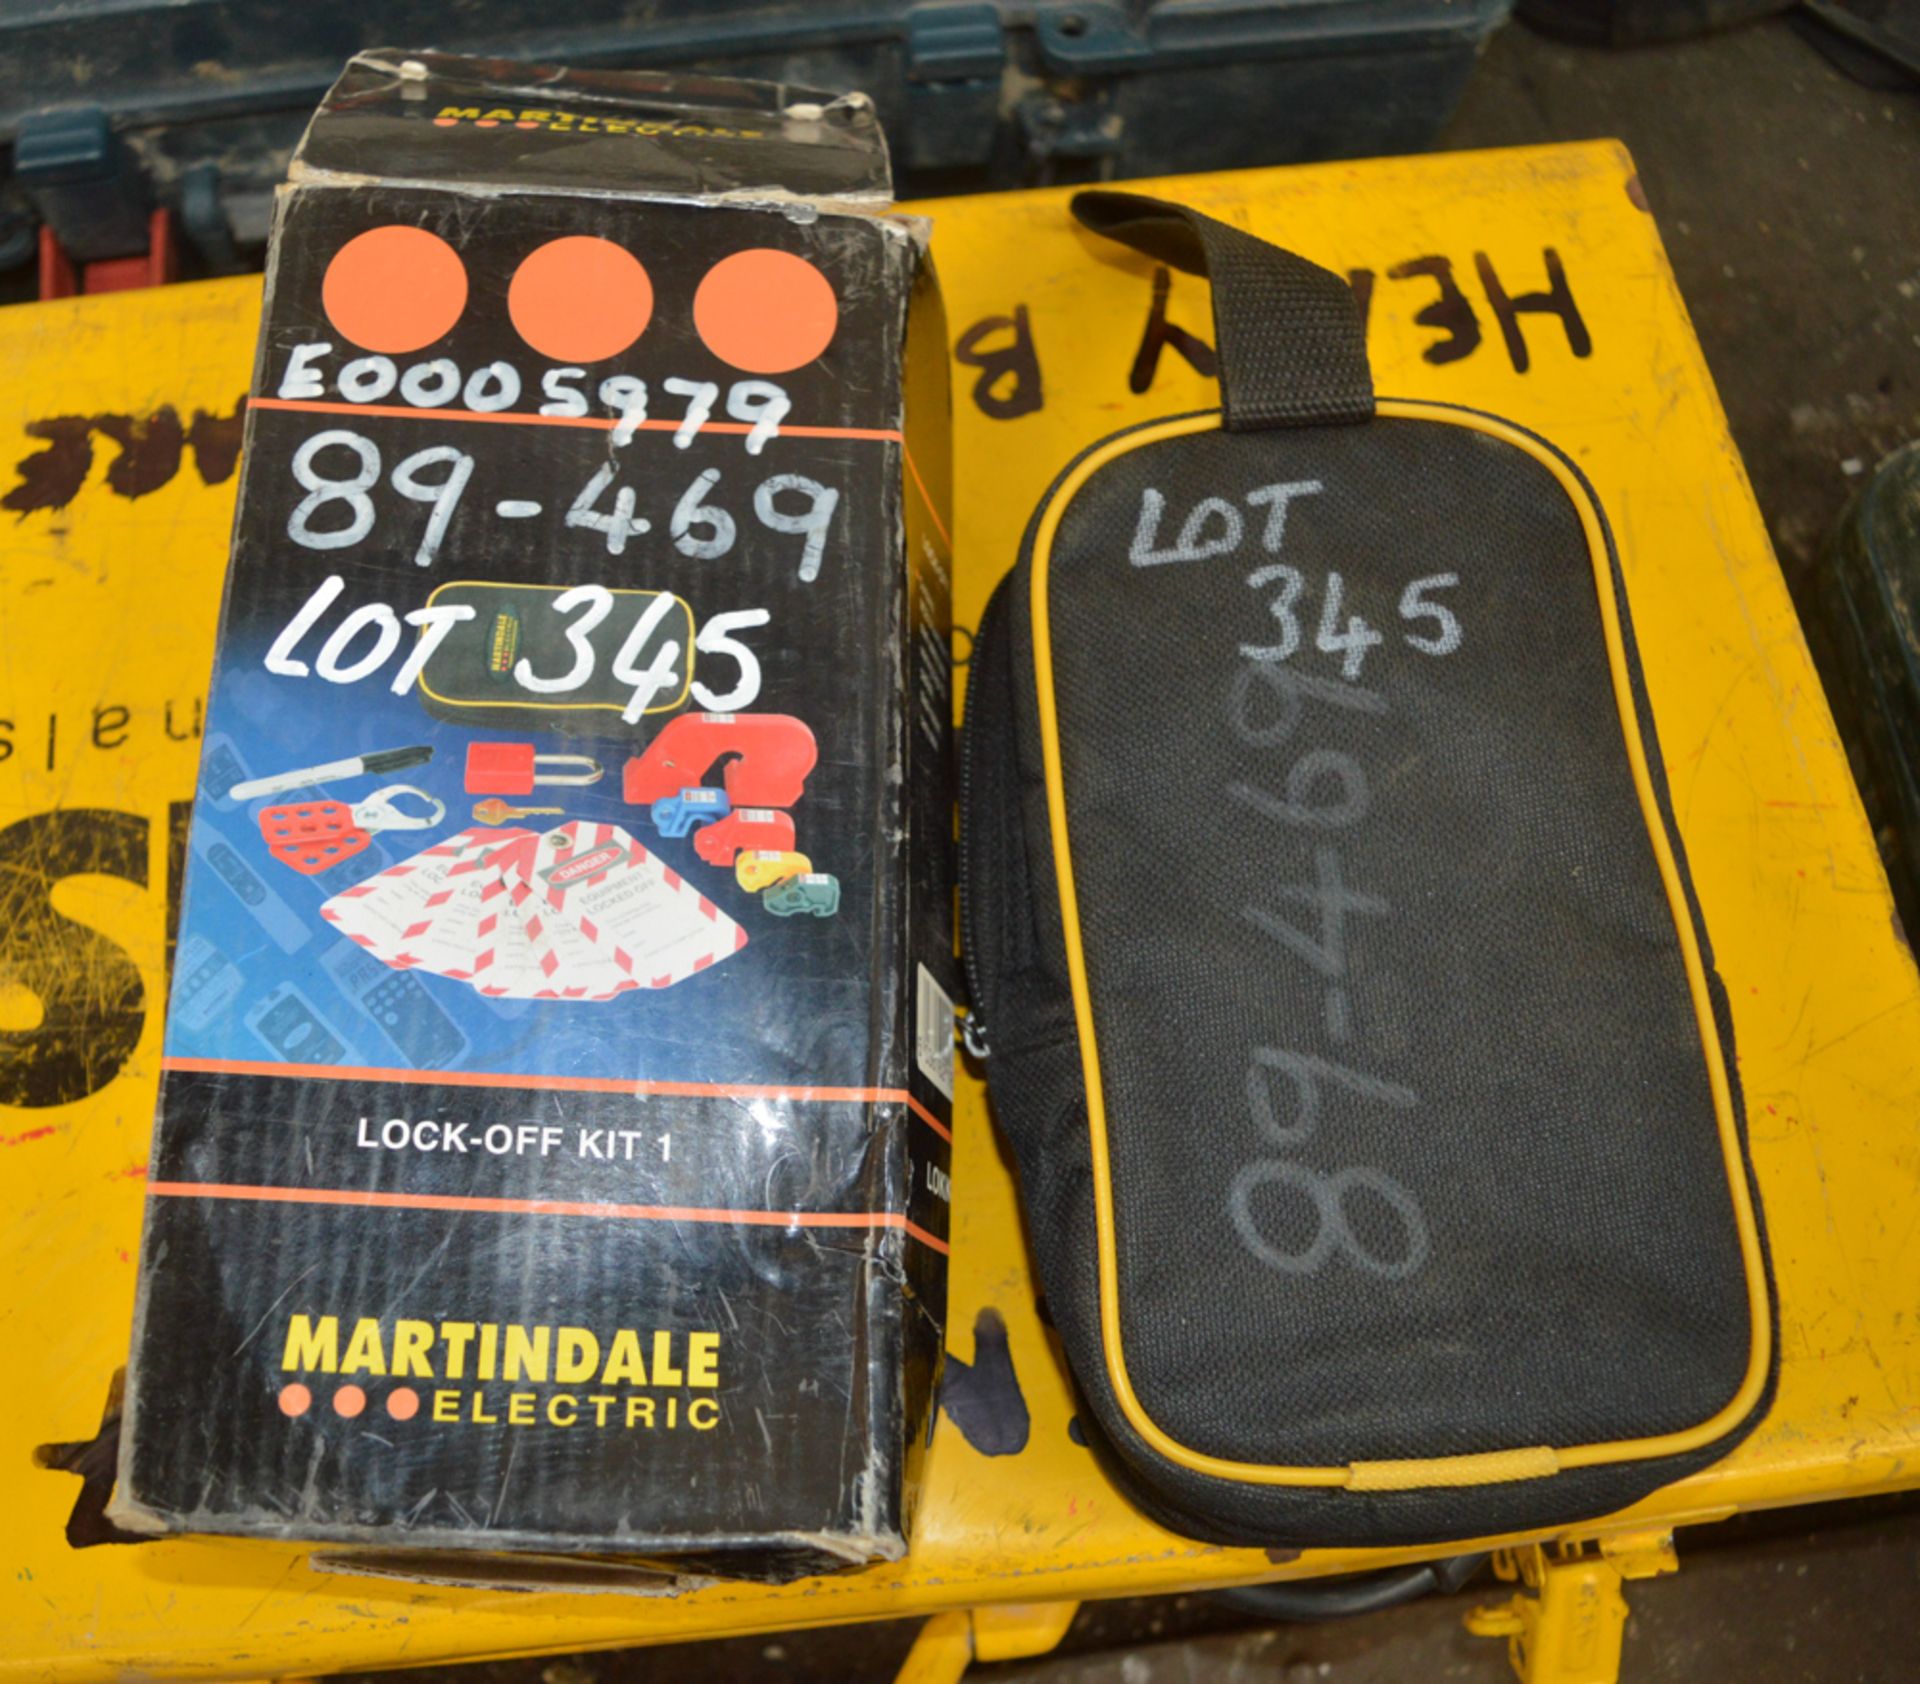 Martindale Lock-Off kit E0005979